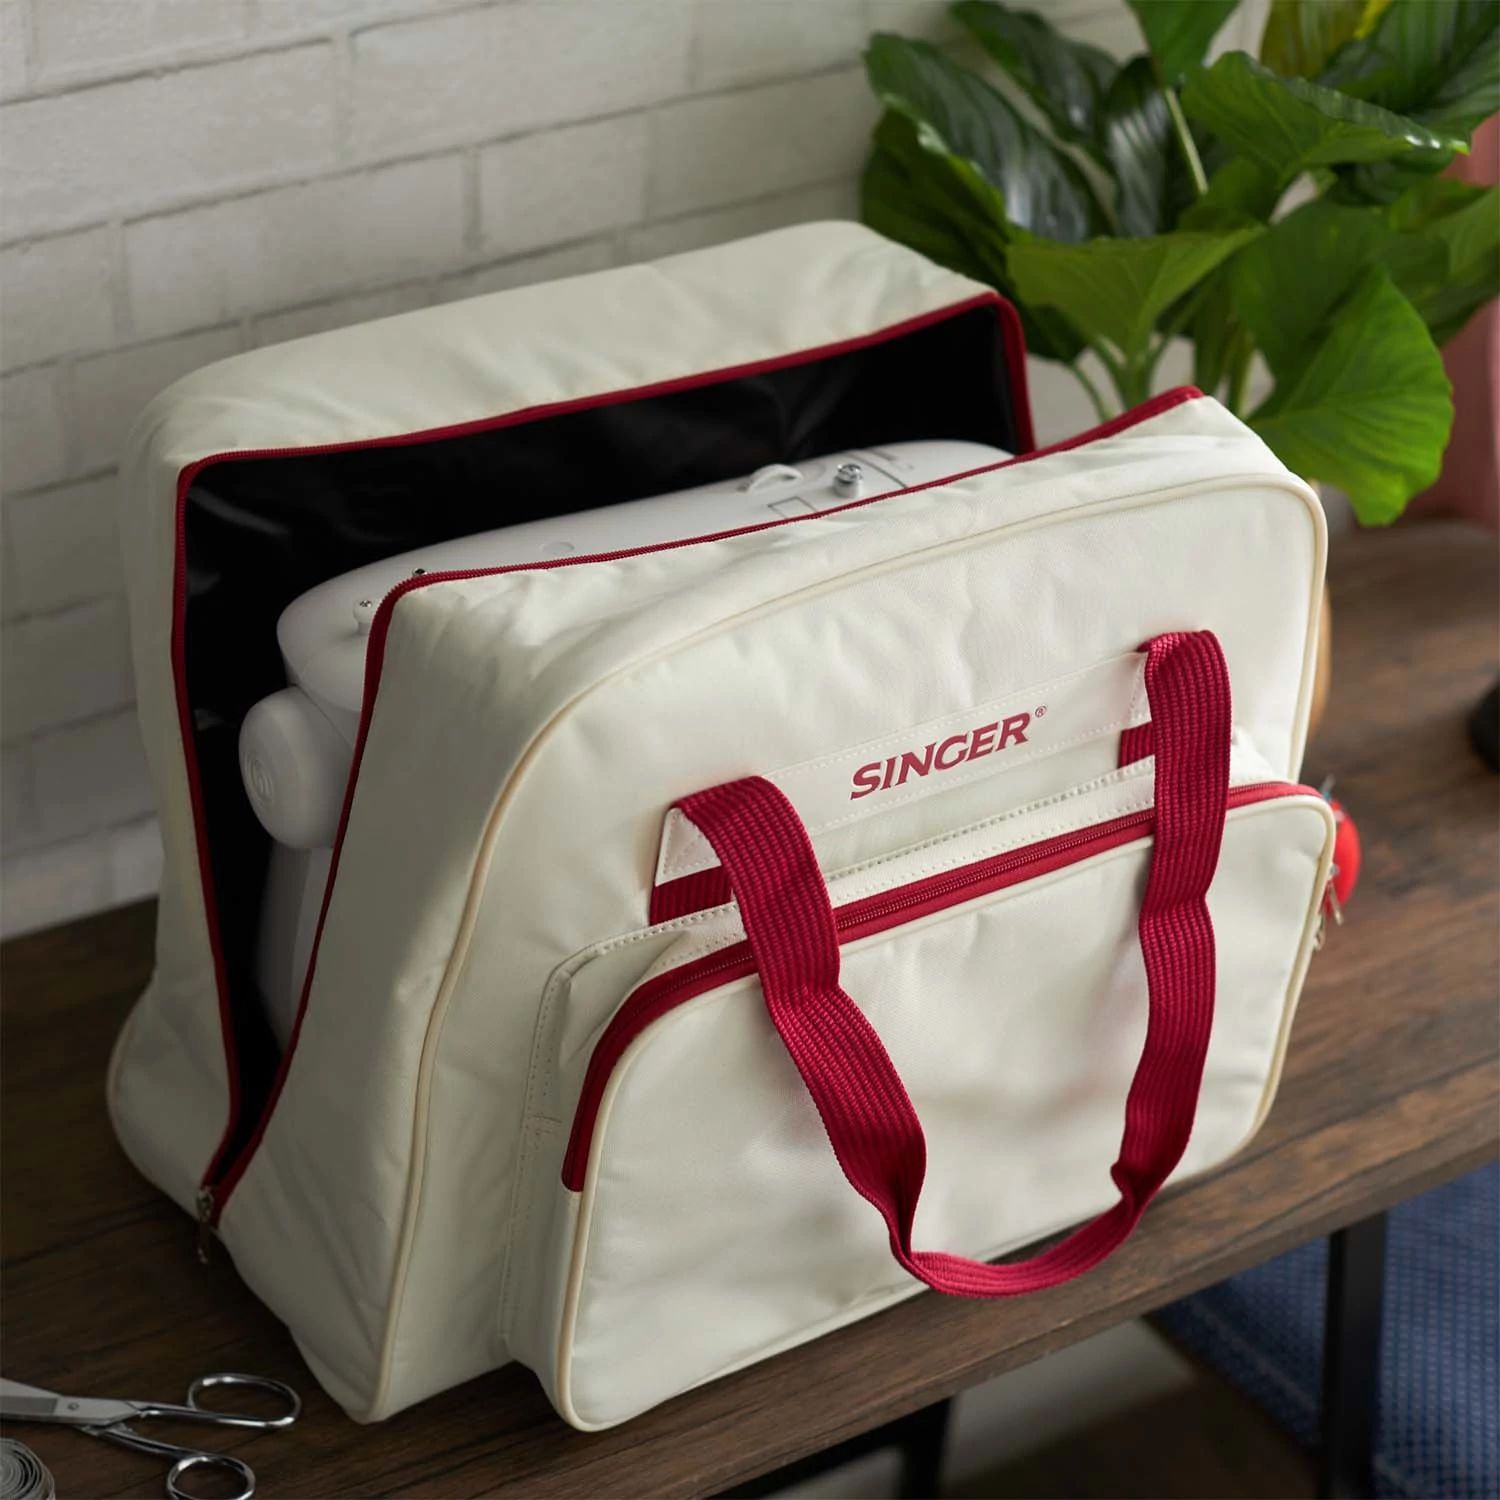 SINGER Cream/Red Universal Tote Bag